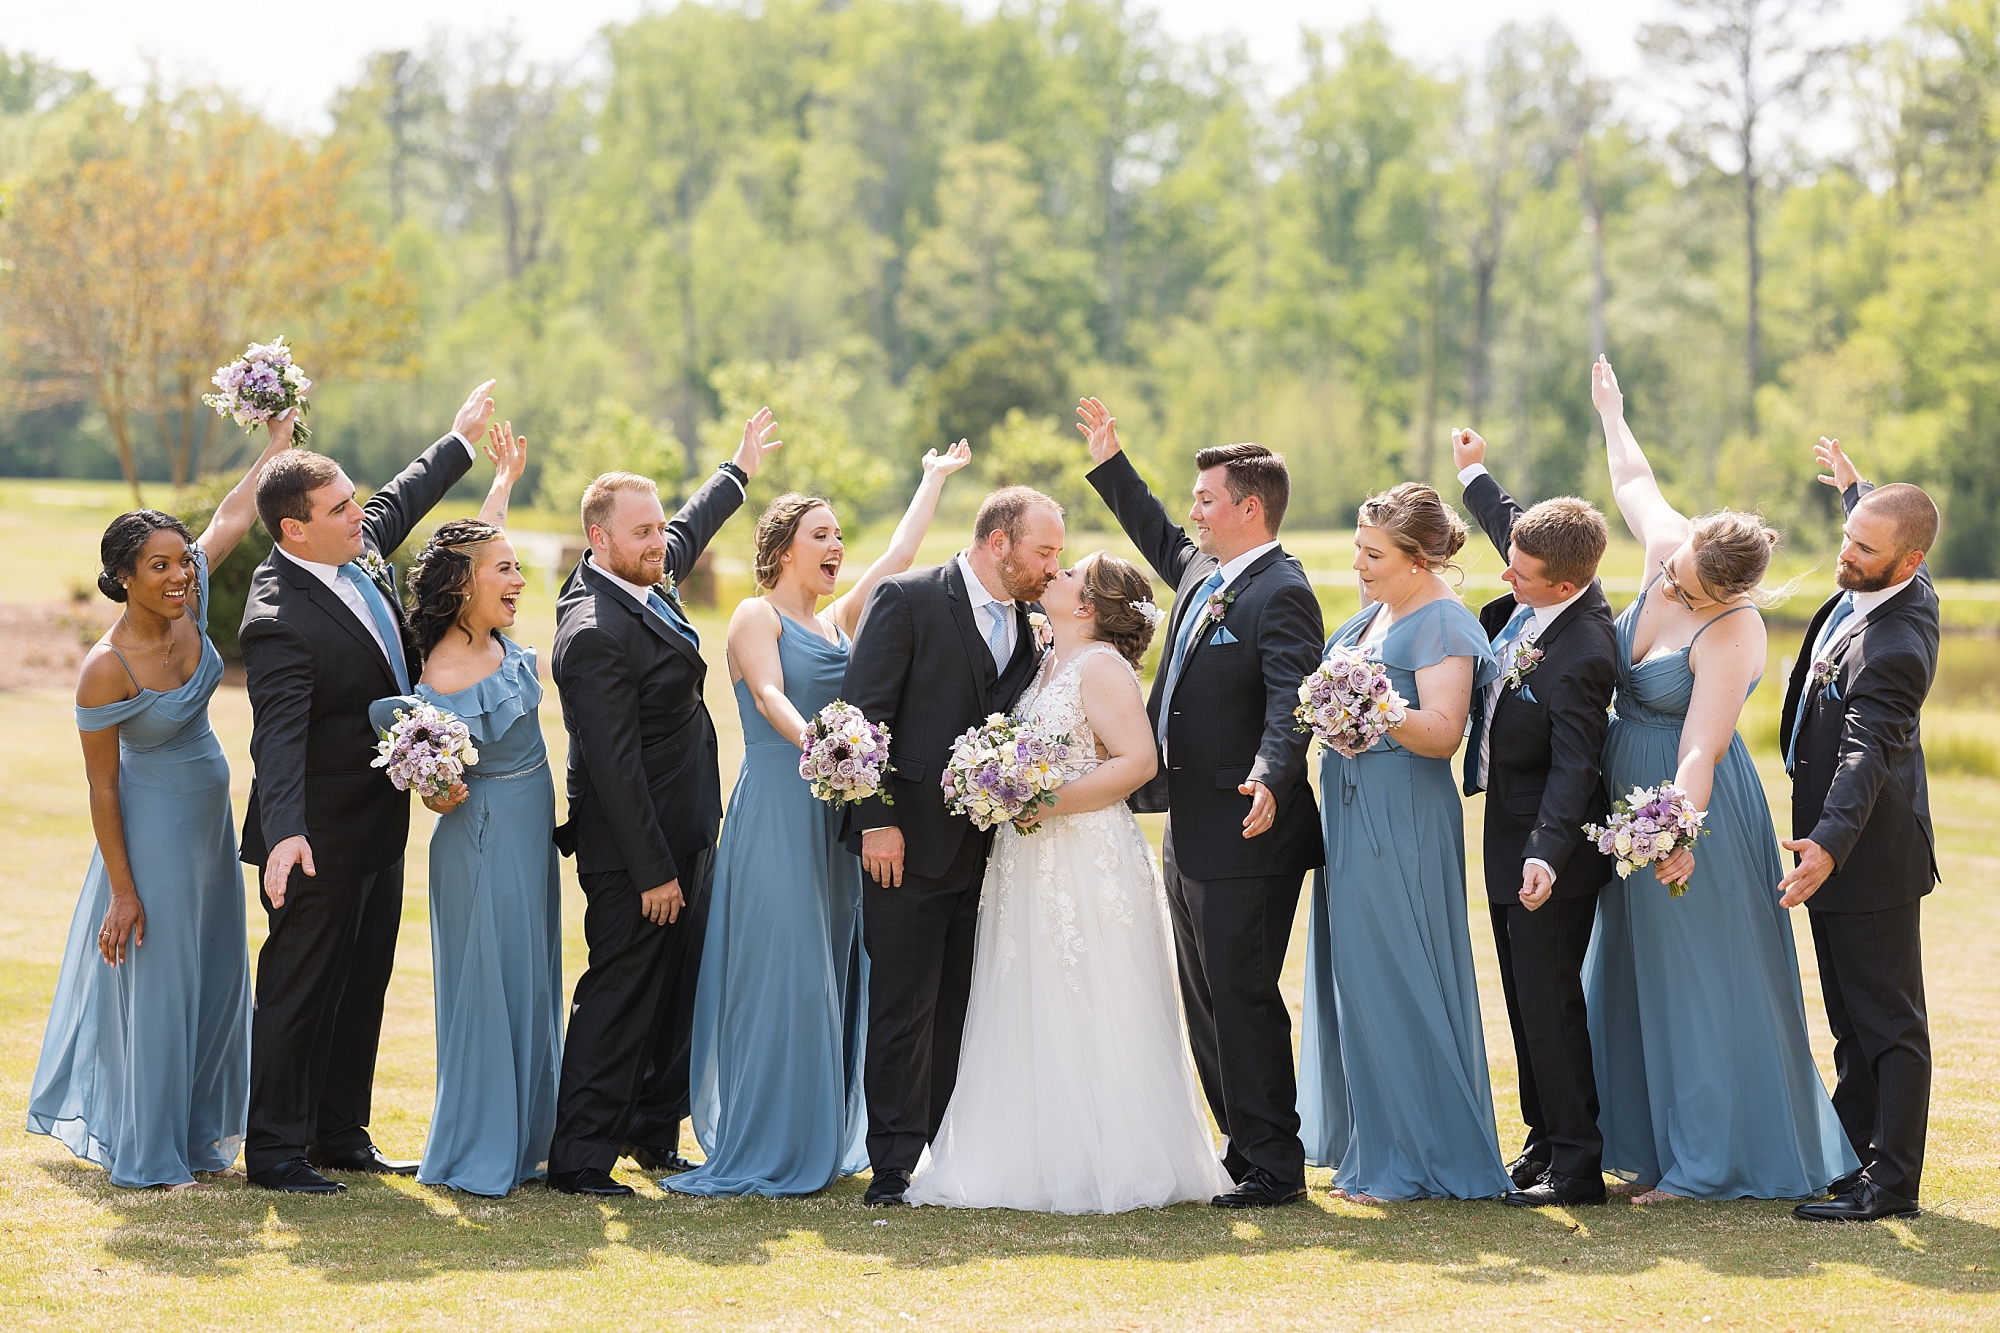 Wedding party celebrating - Raleigh NC Wedding Photographer - Sarah Hinckley Photography